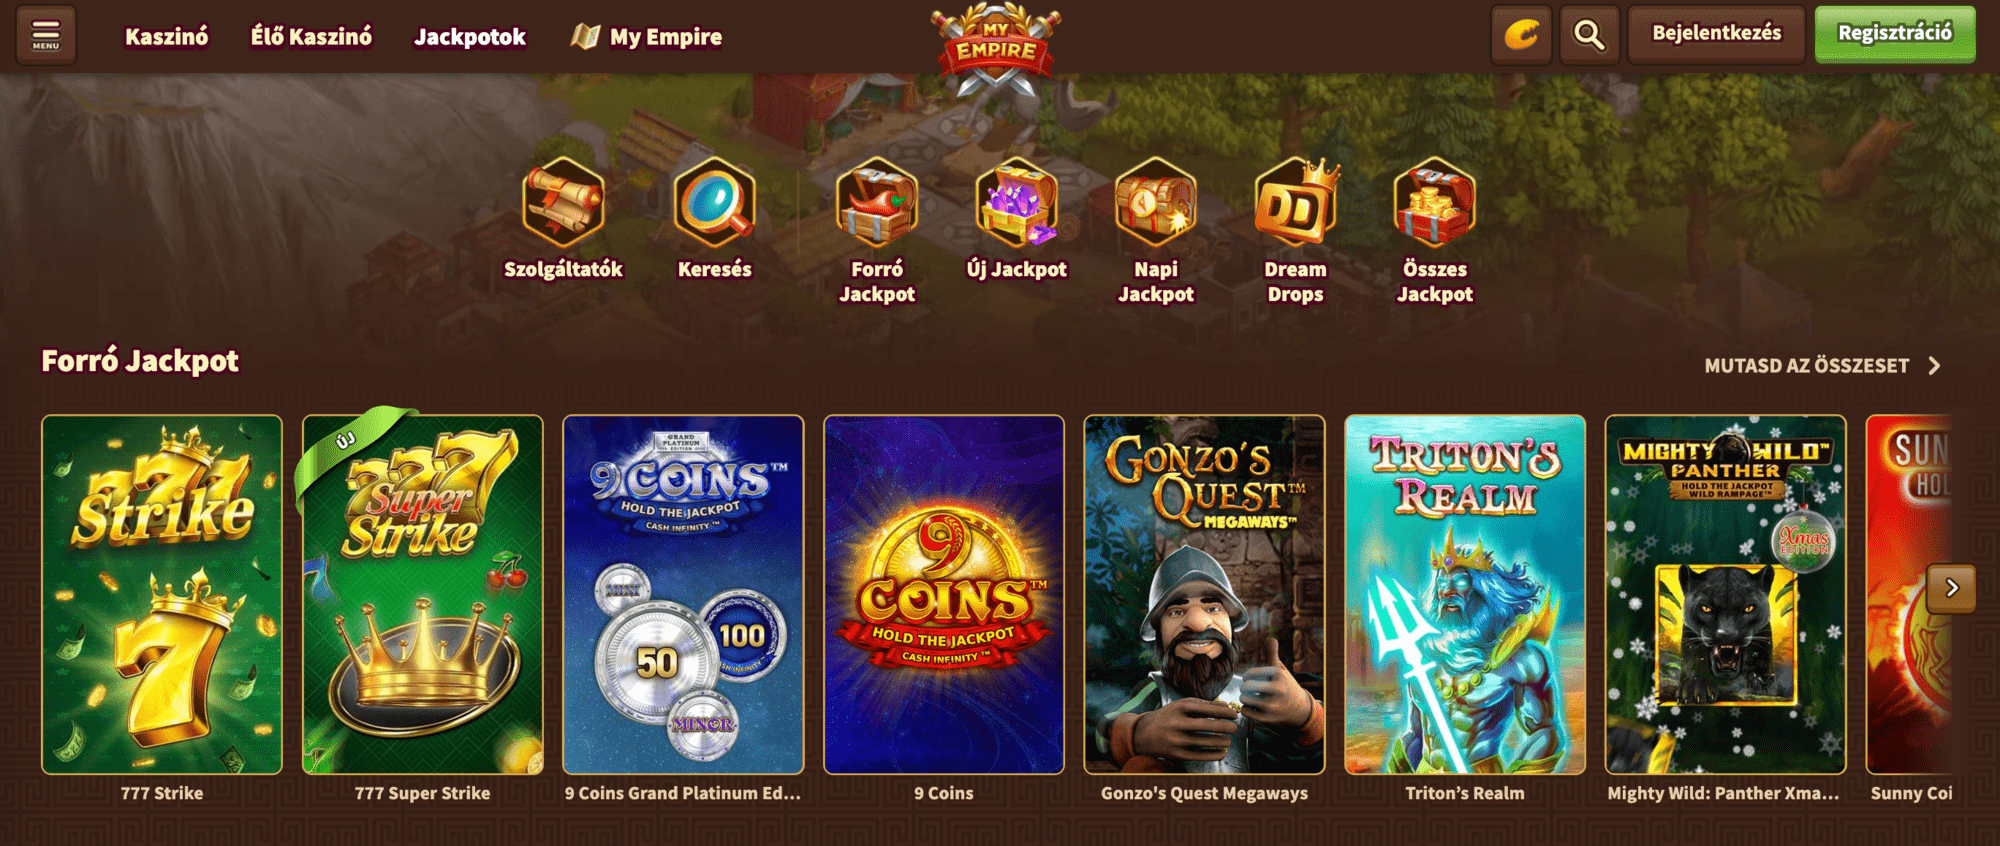 My Empire Casino Jackpot Games